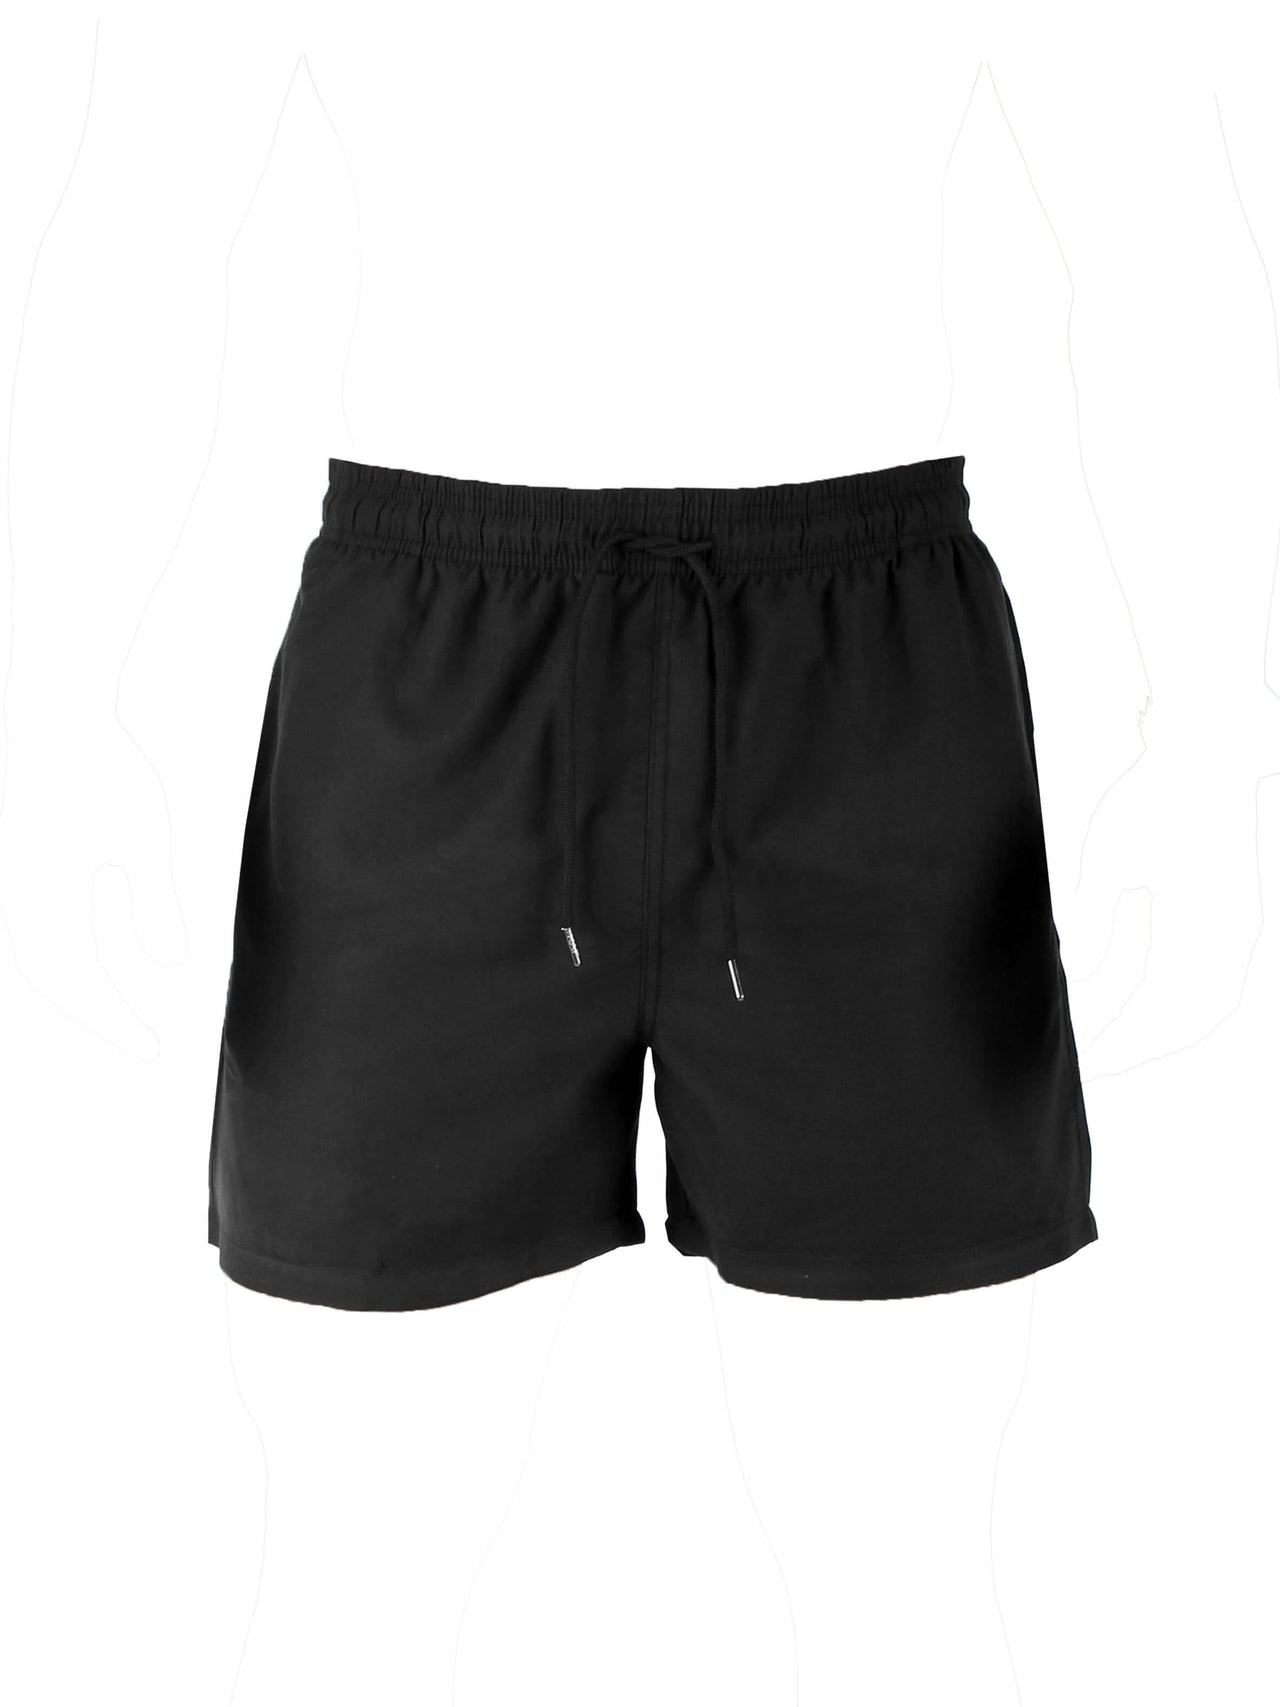 AQUA Swim Shorts - Black